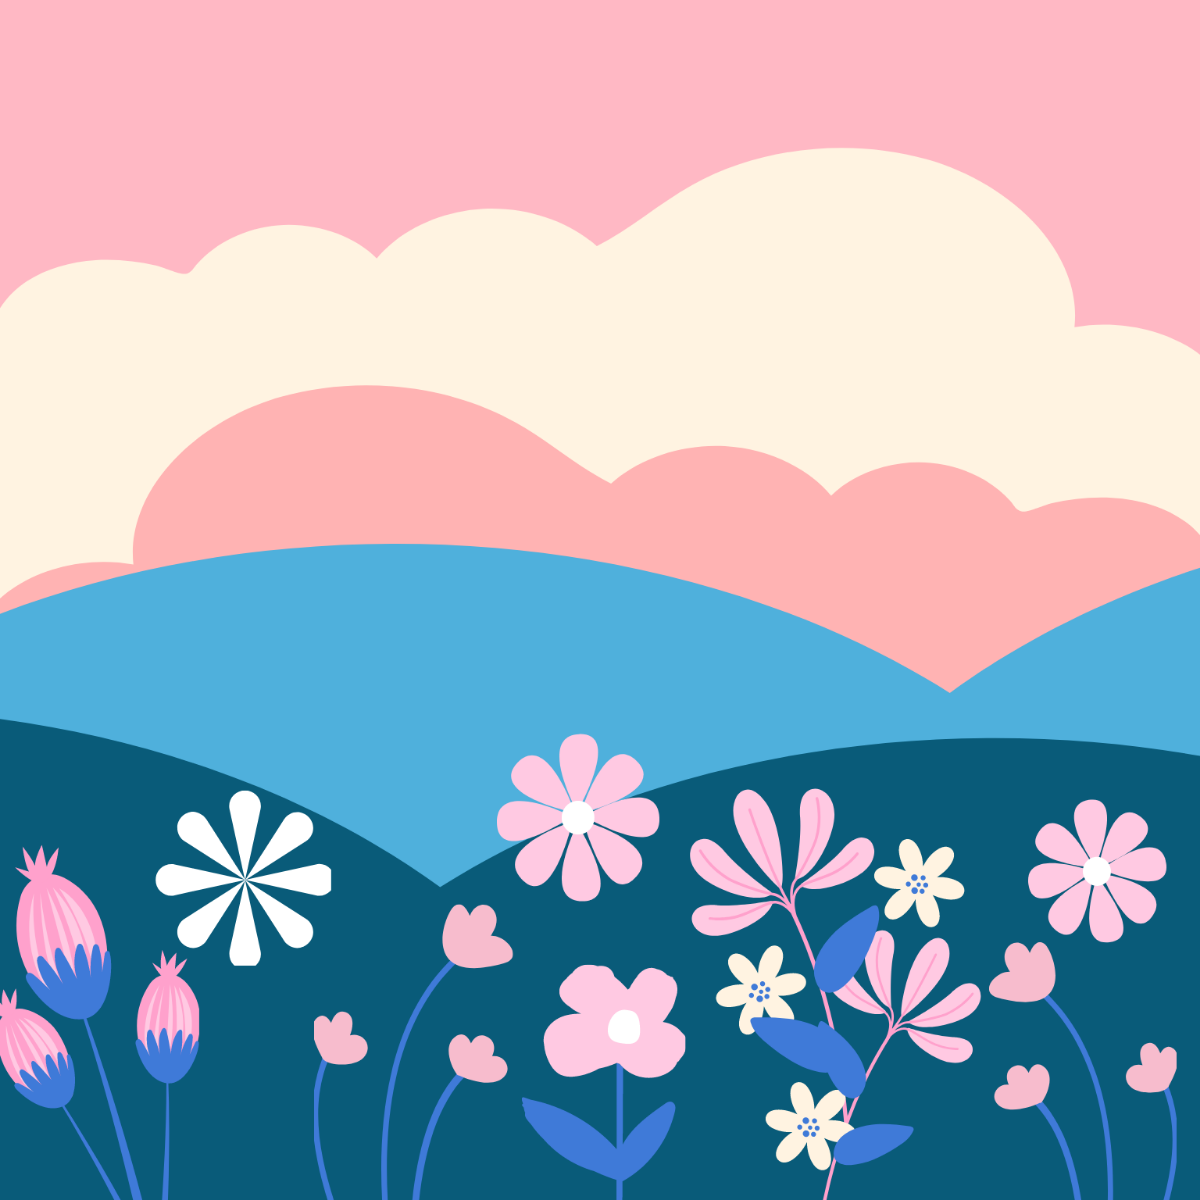 Free Flowers Illustration Template